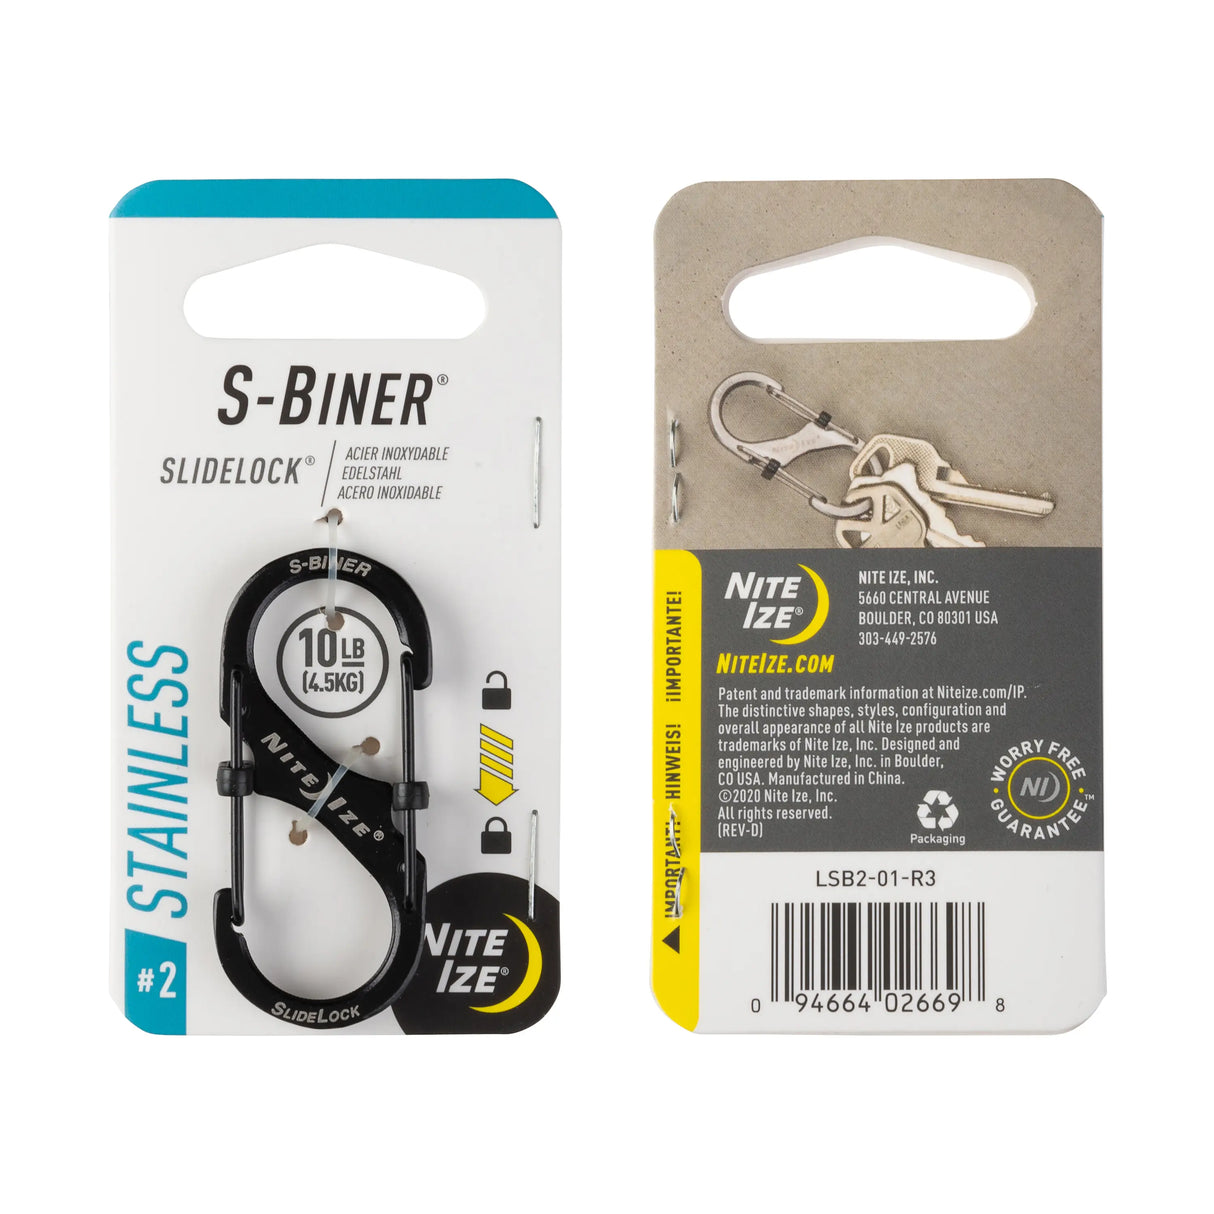 S-Biner® Slidelock® Stainless Steel #2